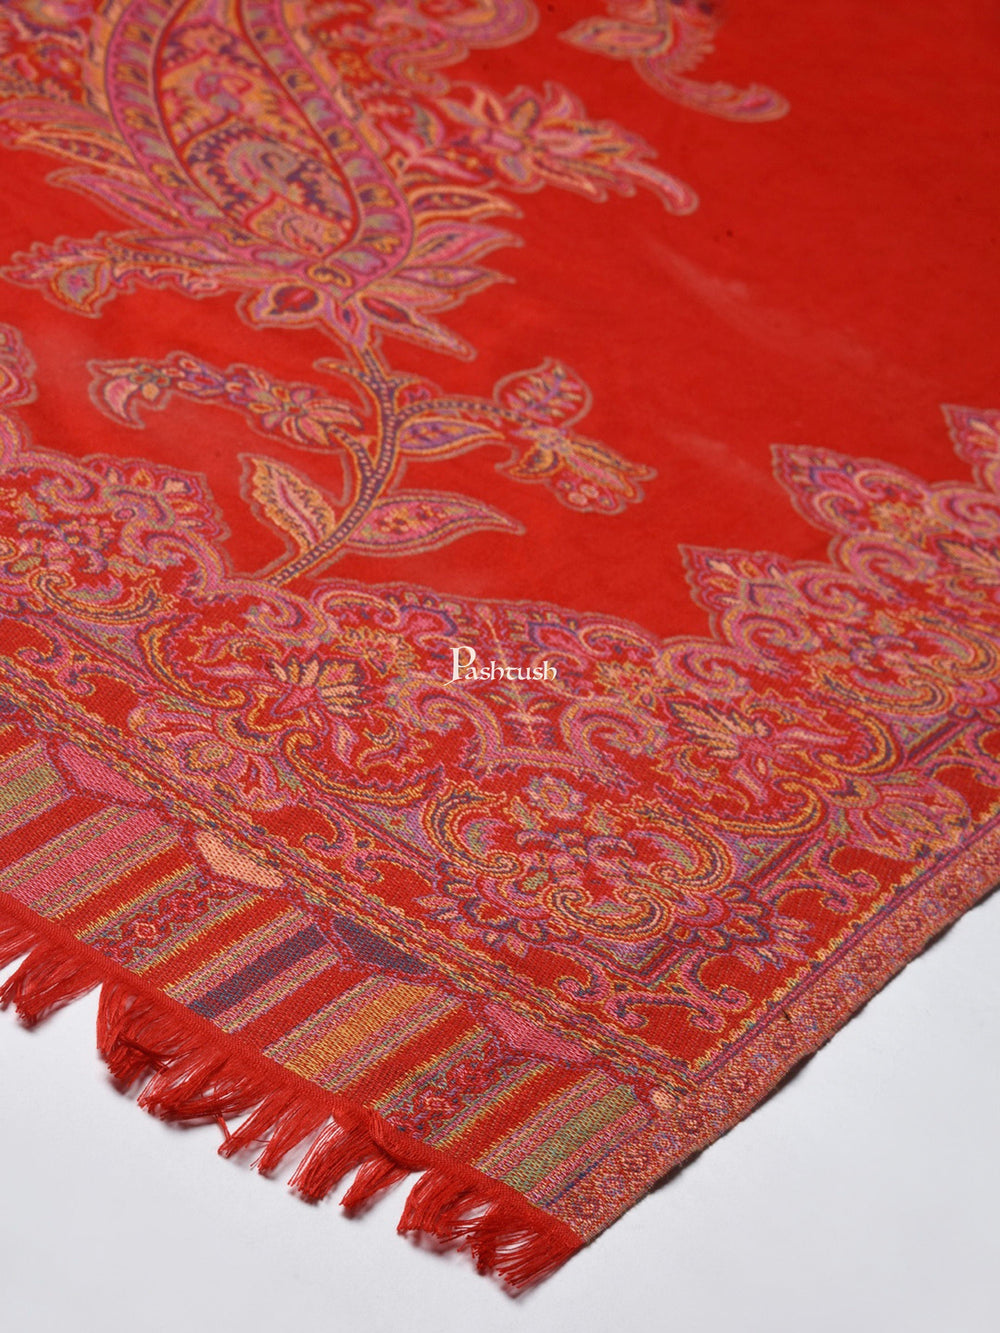 Pashtush India Womens Shawls Pashtush Women Red Ethnic Motifs Woven Design Designer Shawl